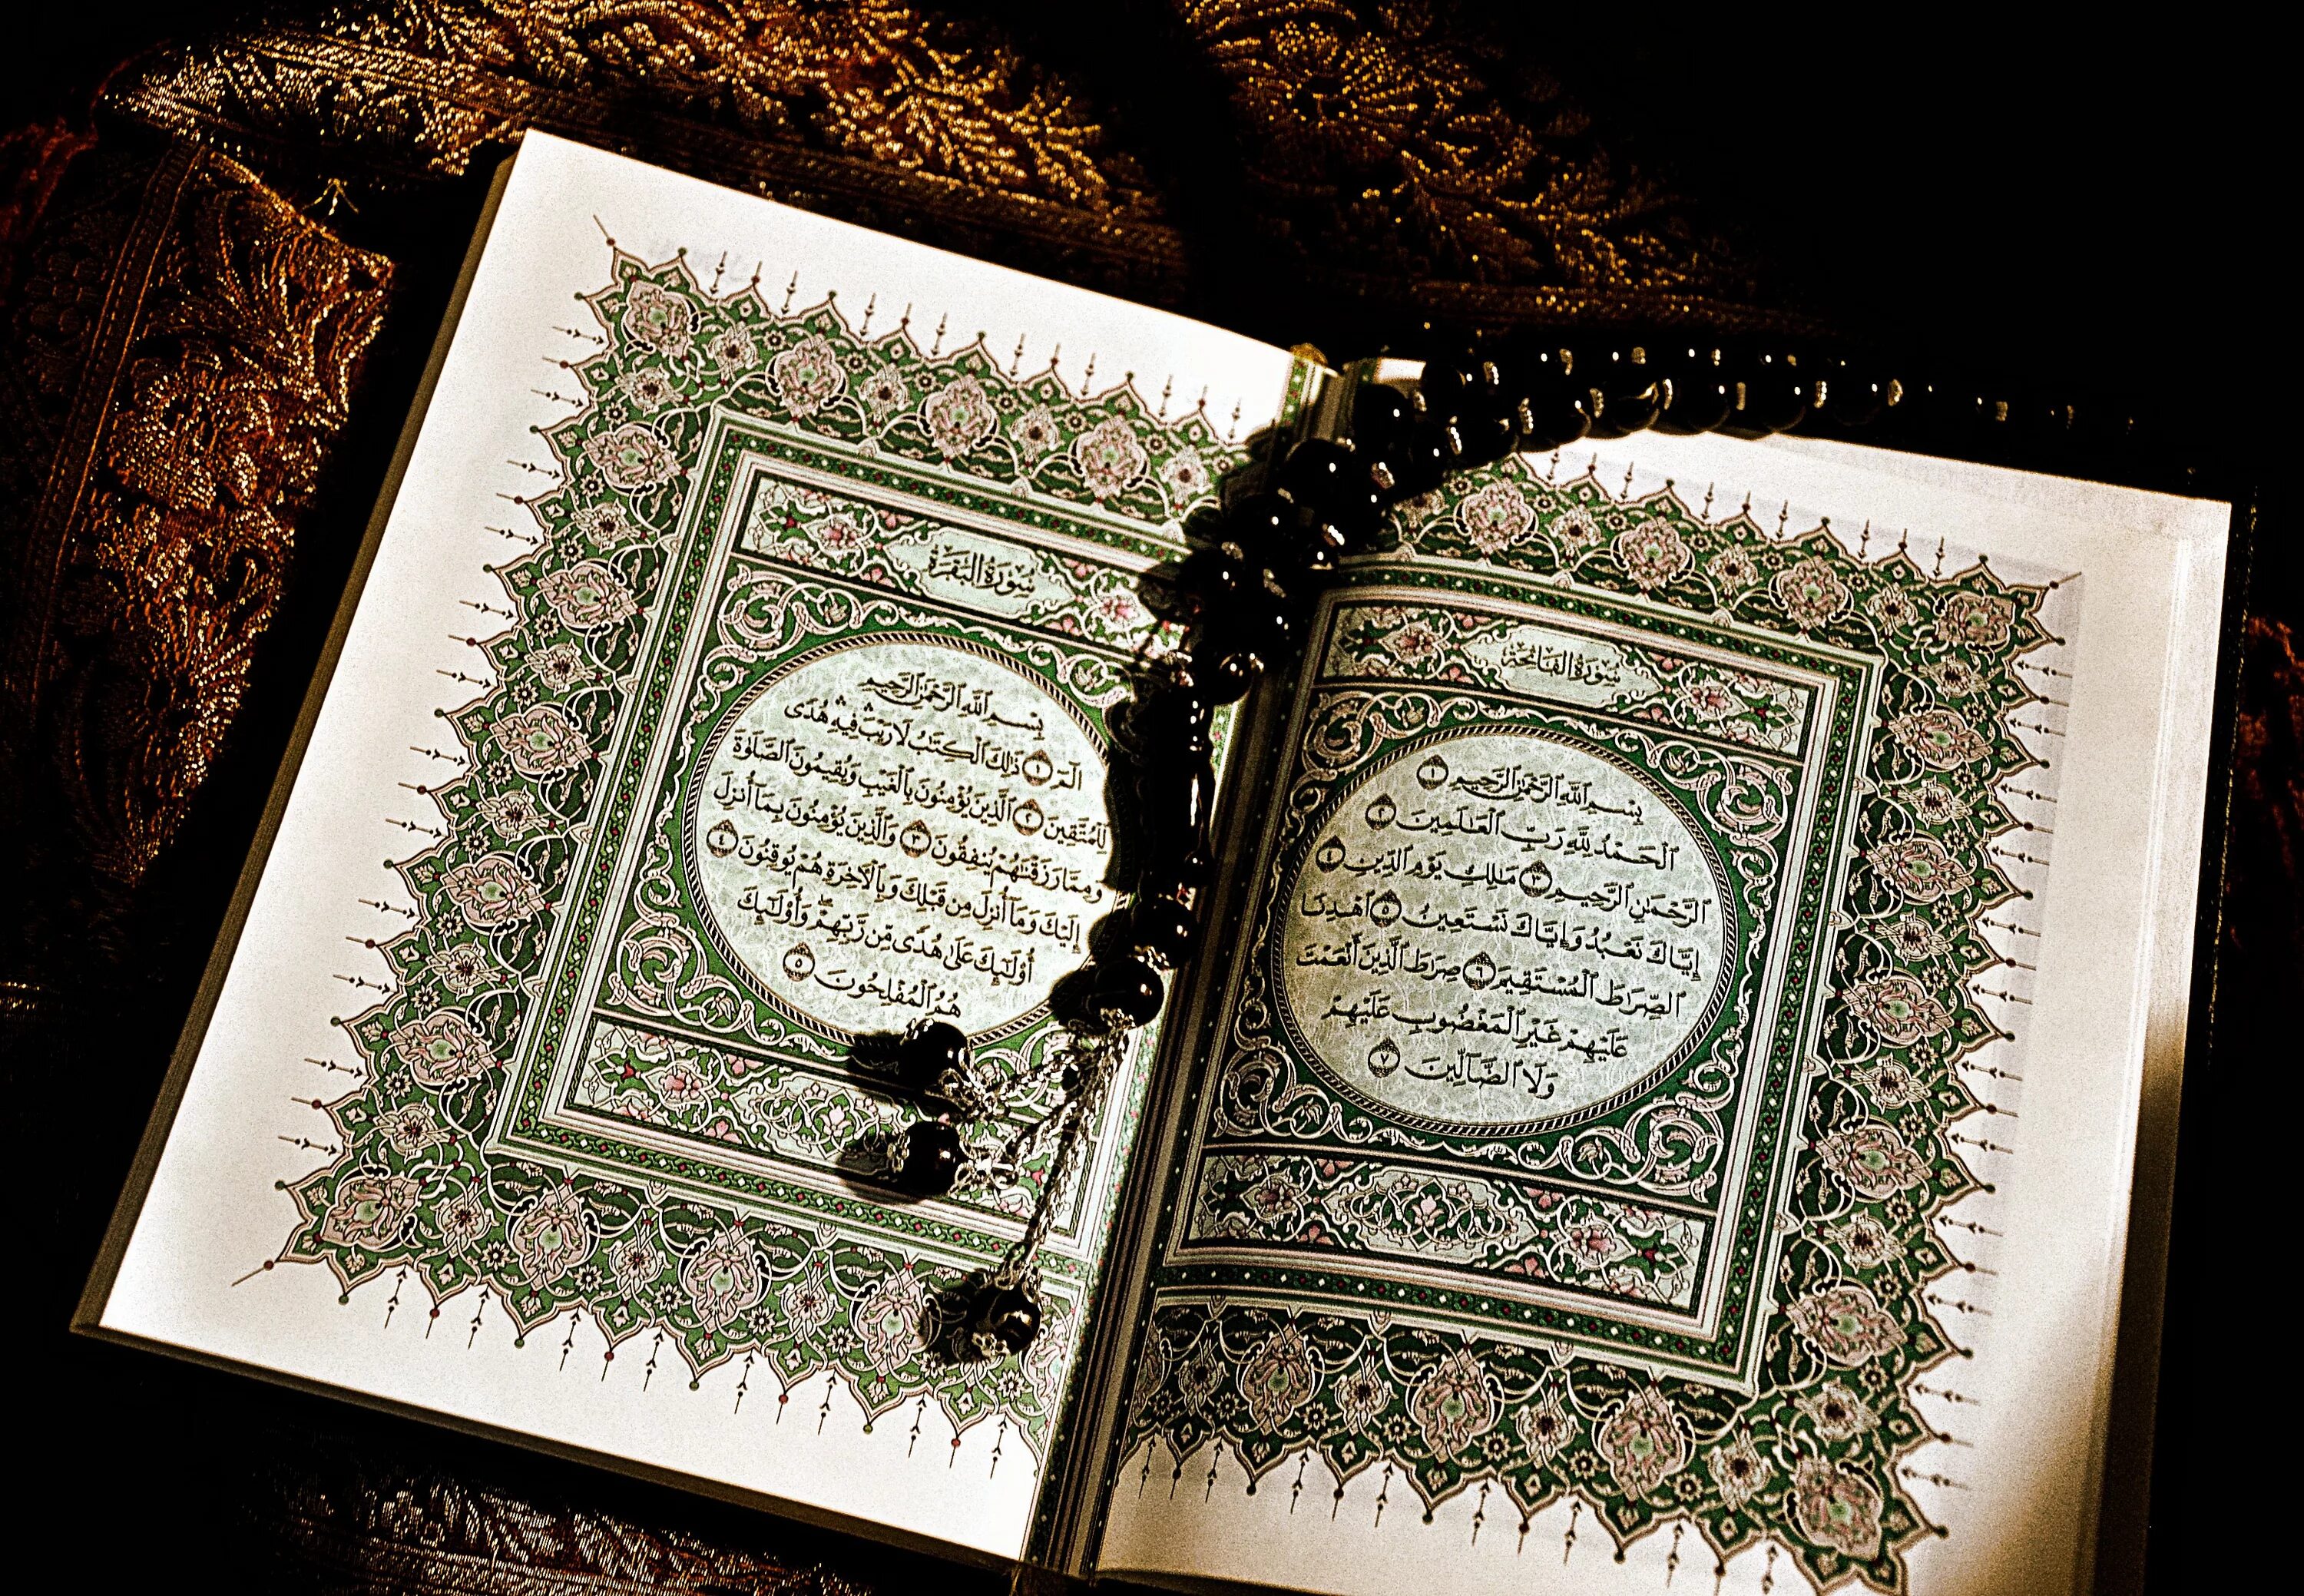 Quroni karim kitobi. Сура 110 АН-Наср. Коран Мухаммад. Красивый Коран.